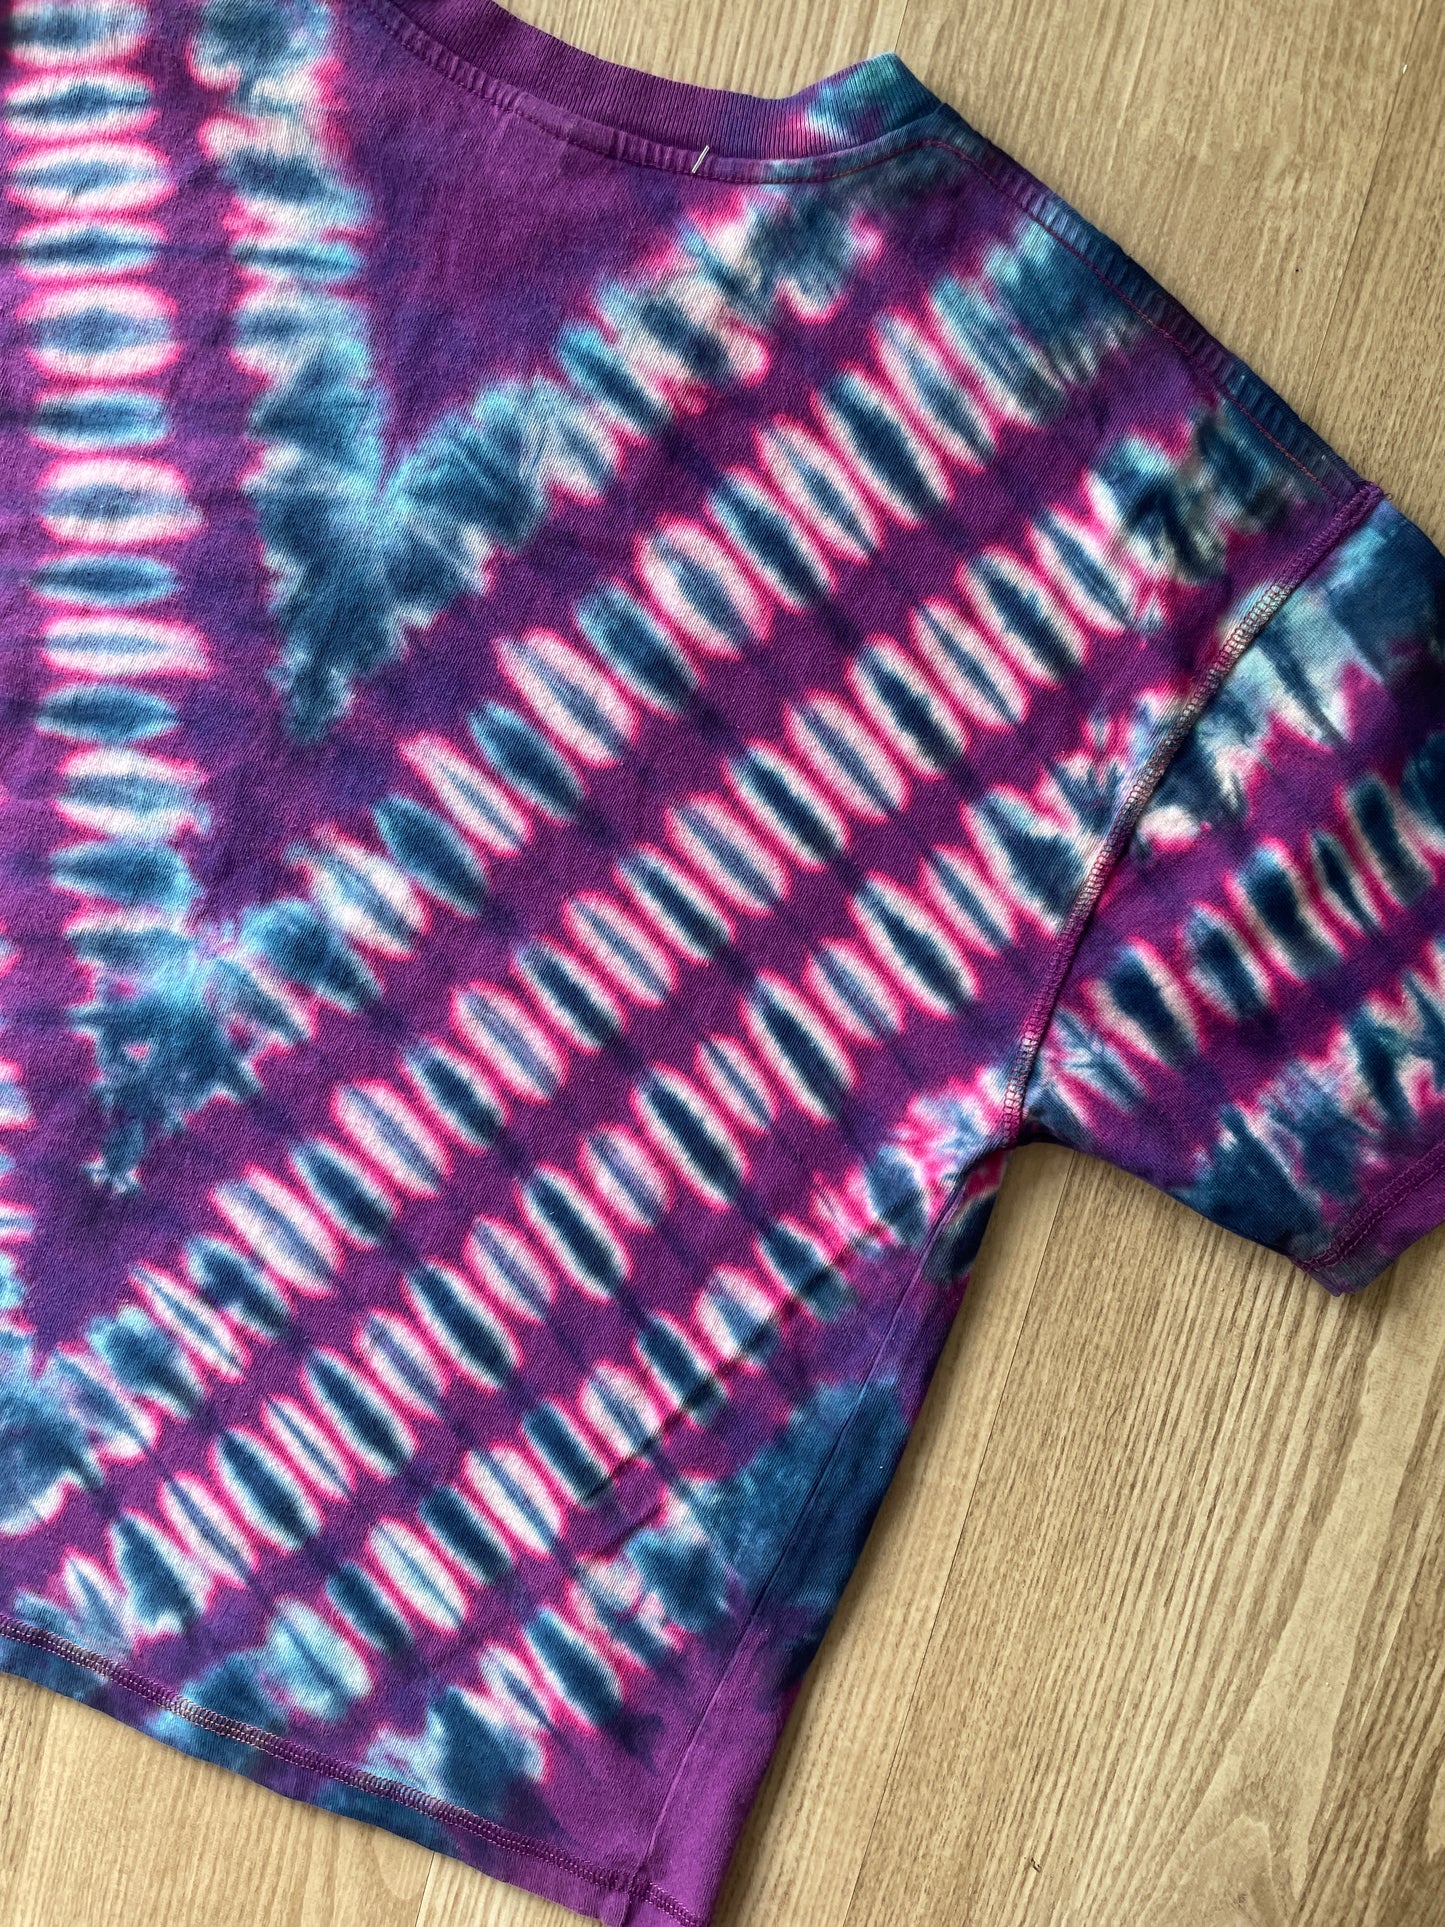 MEDIUM Women’s Climbing Shoe Reverse Handmade Tie Dye T-Shirt | One-Of-a-Kind Purple and Pink Short Sleeve